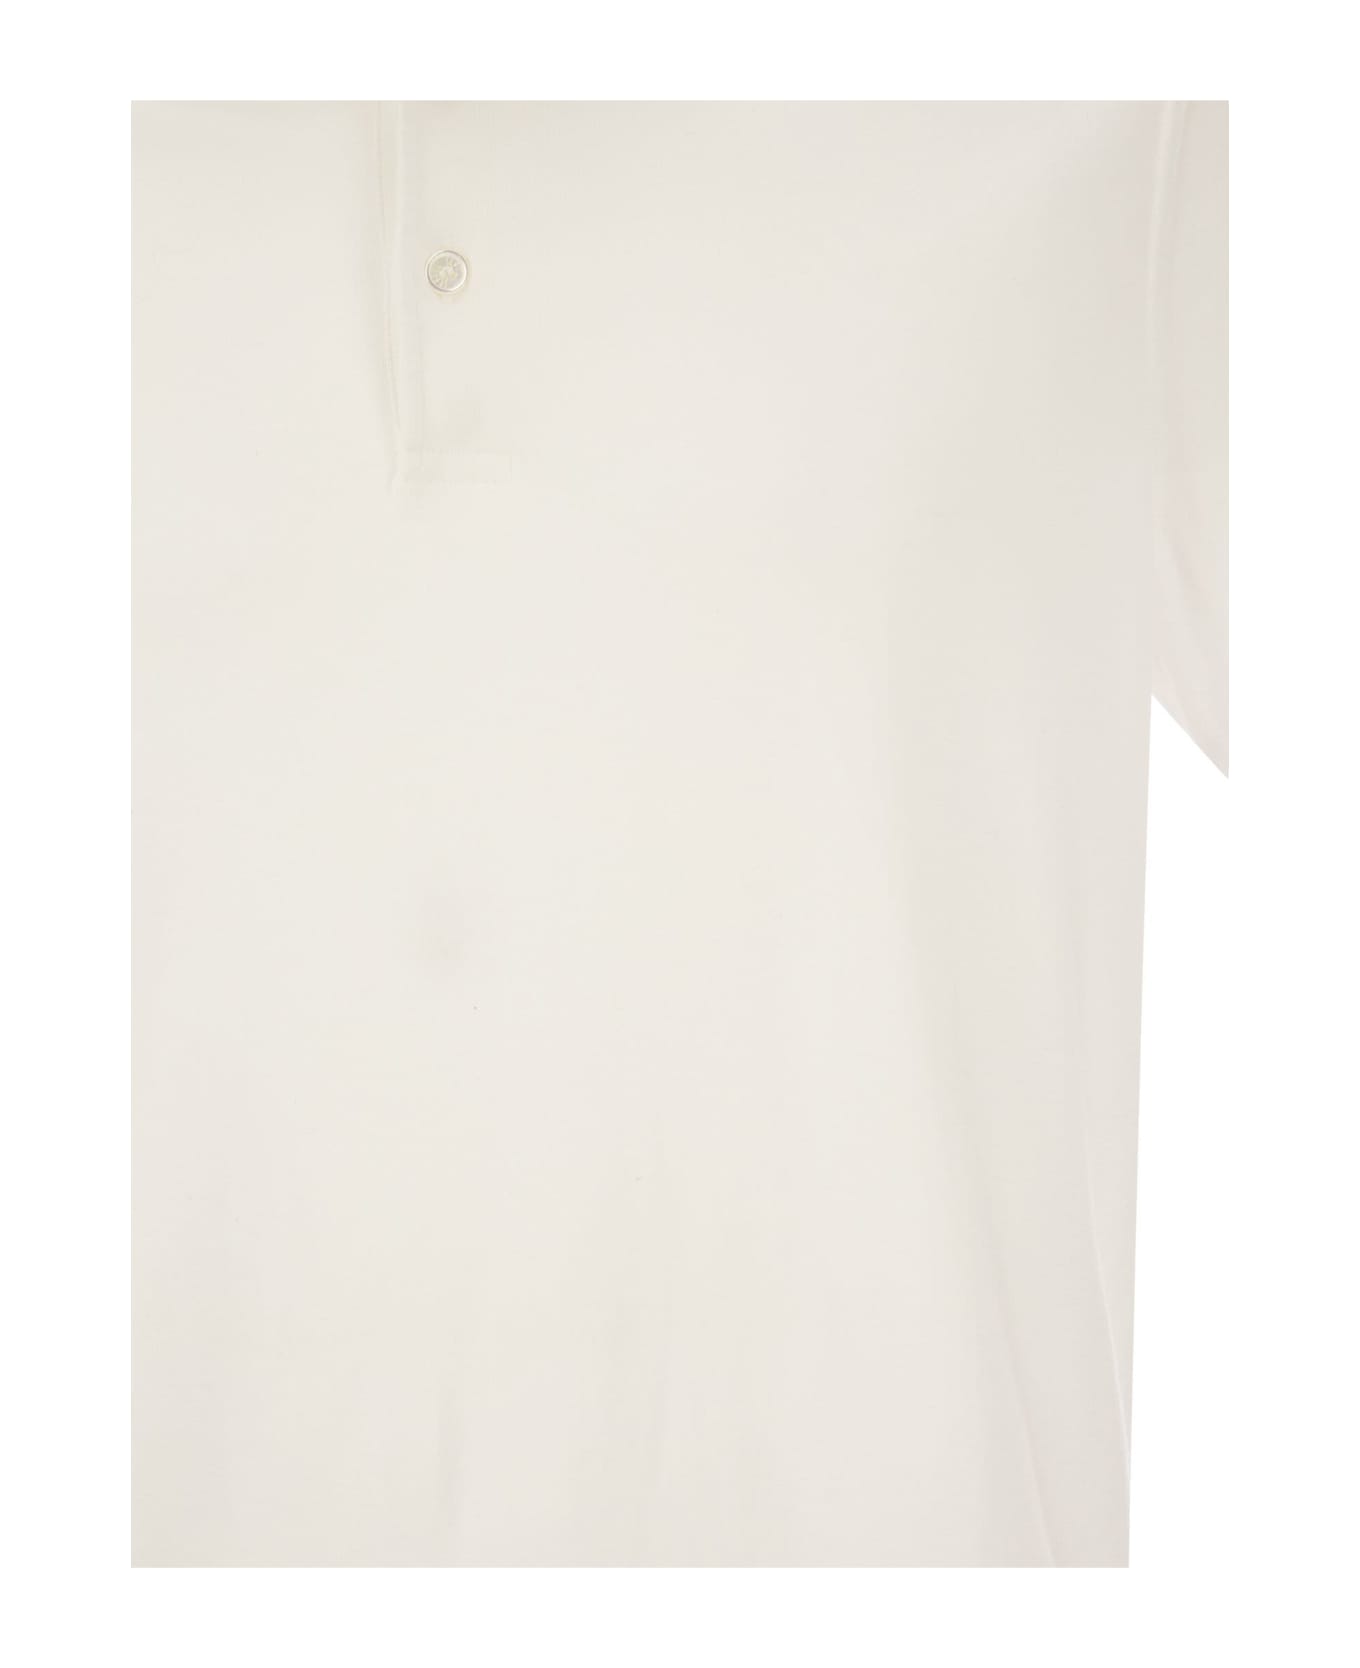 Fedeli Short-sleeved Polo Shirt - White ポロシャツ